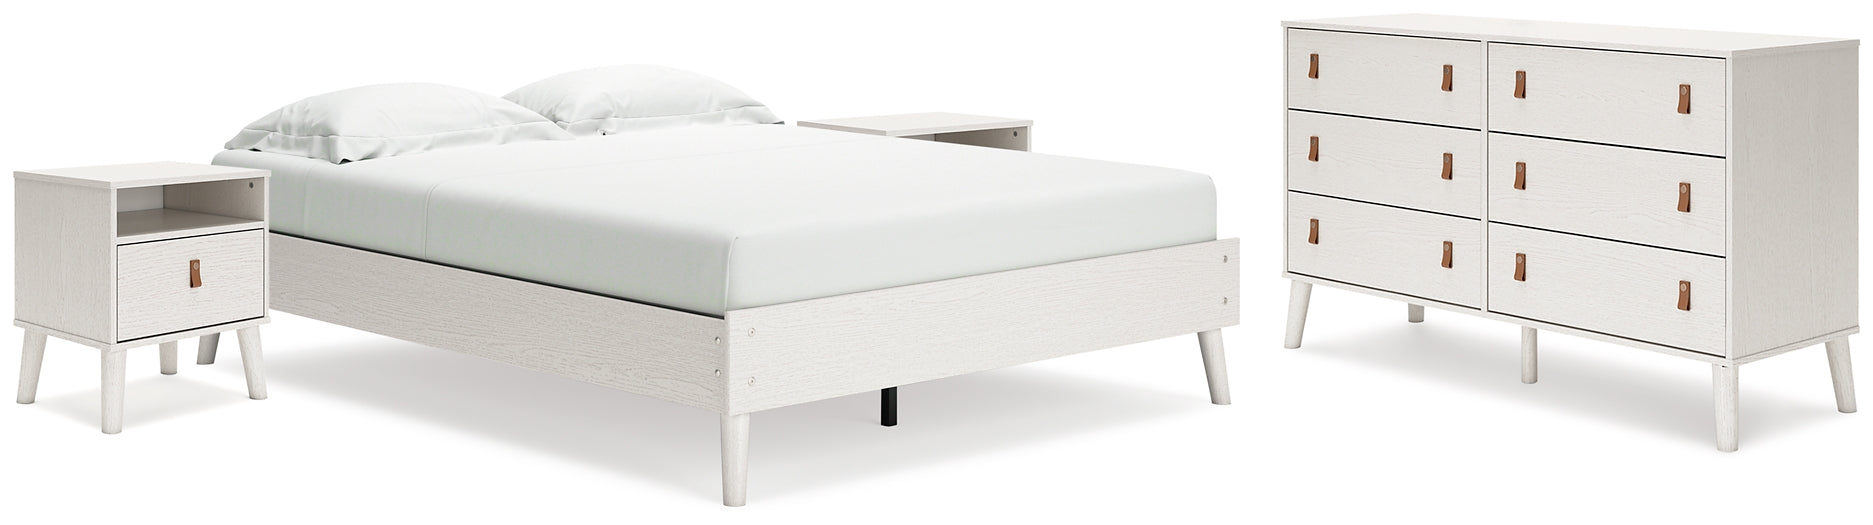 Aprilyn Queen Platform Bed with Dresser and 2 Nightstands